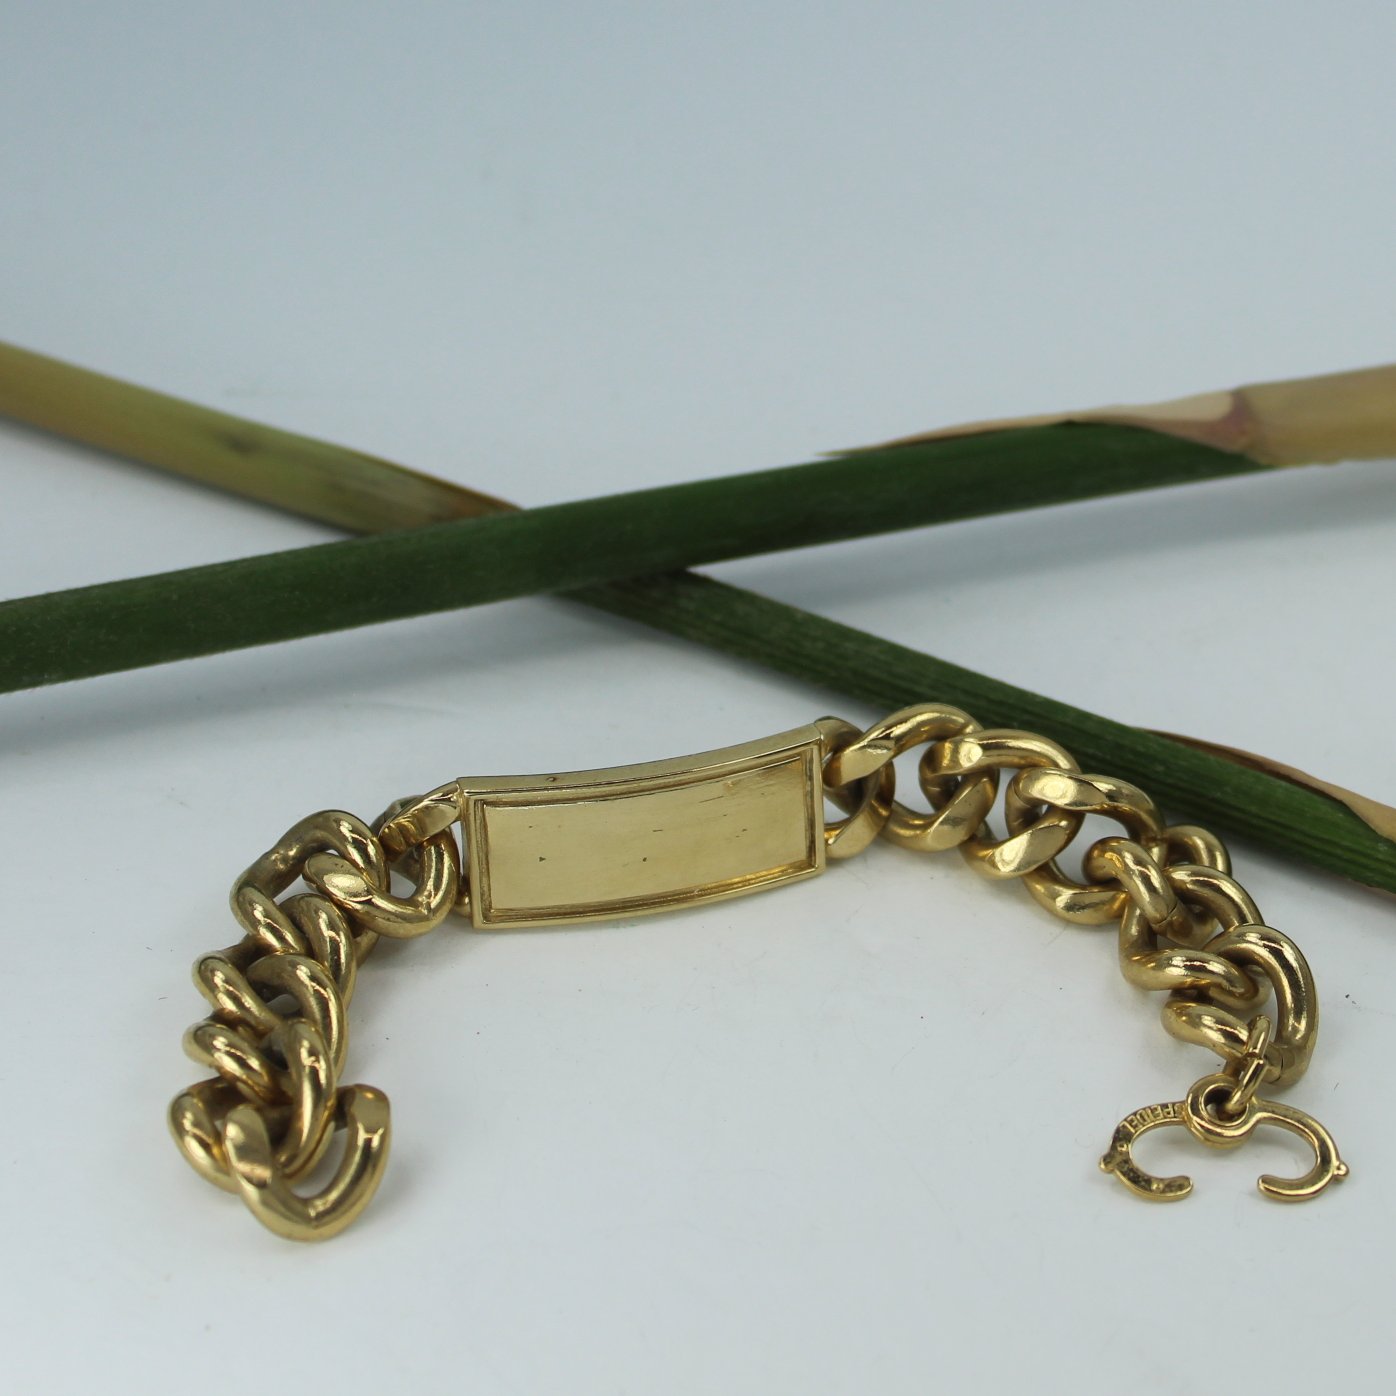 Speidel Vintage Bracelet Curb Link ID Mid Century Very Heavy Gold Metal Blank No Engravingf ront view blank no monogram